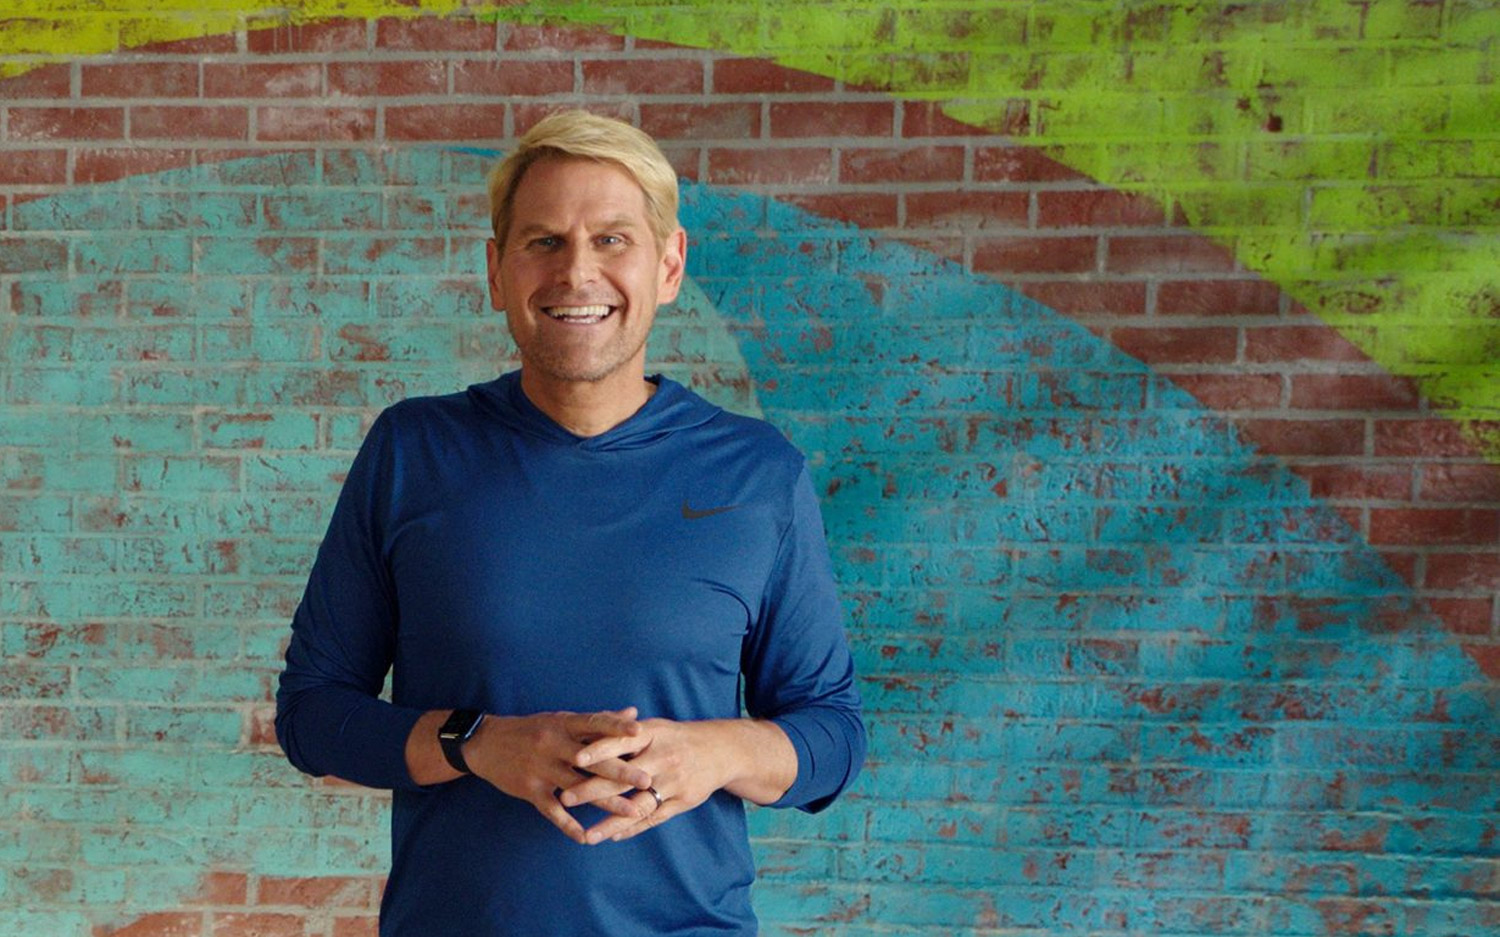 Six Apple Watch workout tips from Apple's fitness expert Jay Blahnik